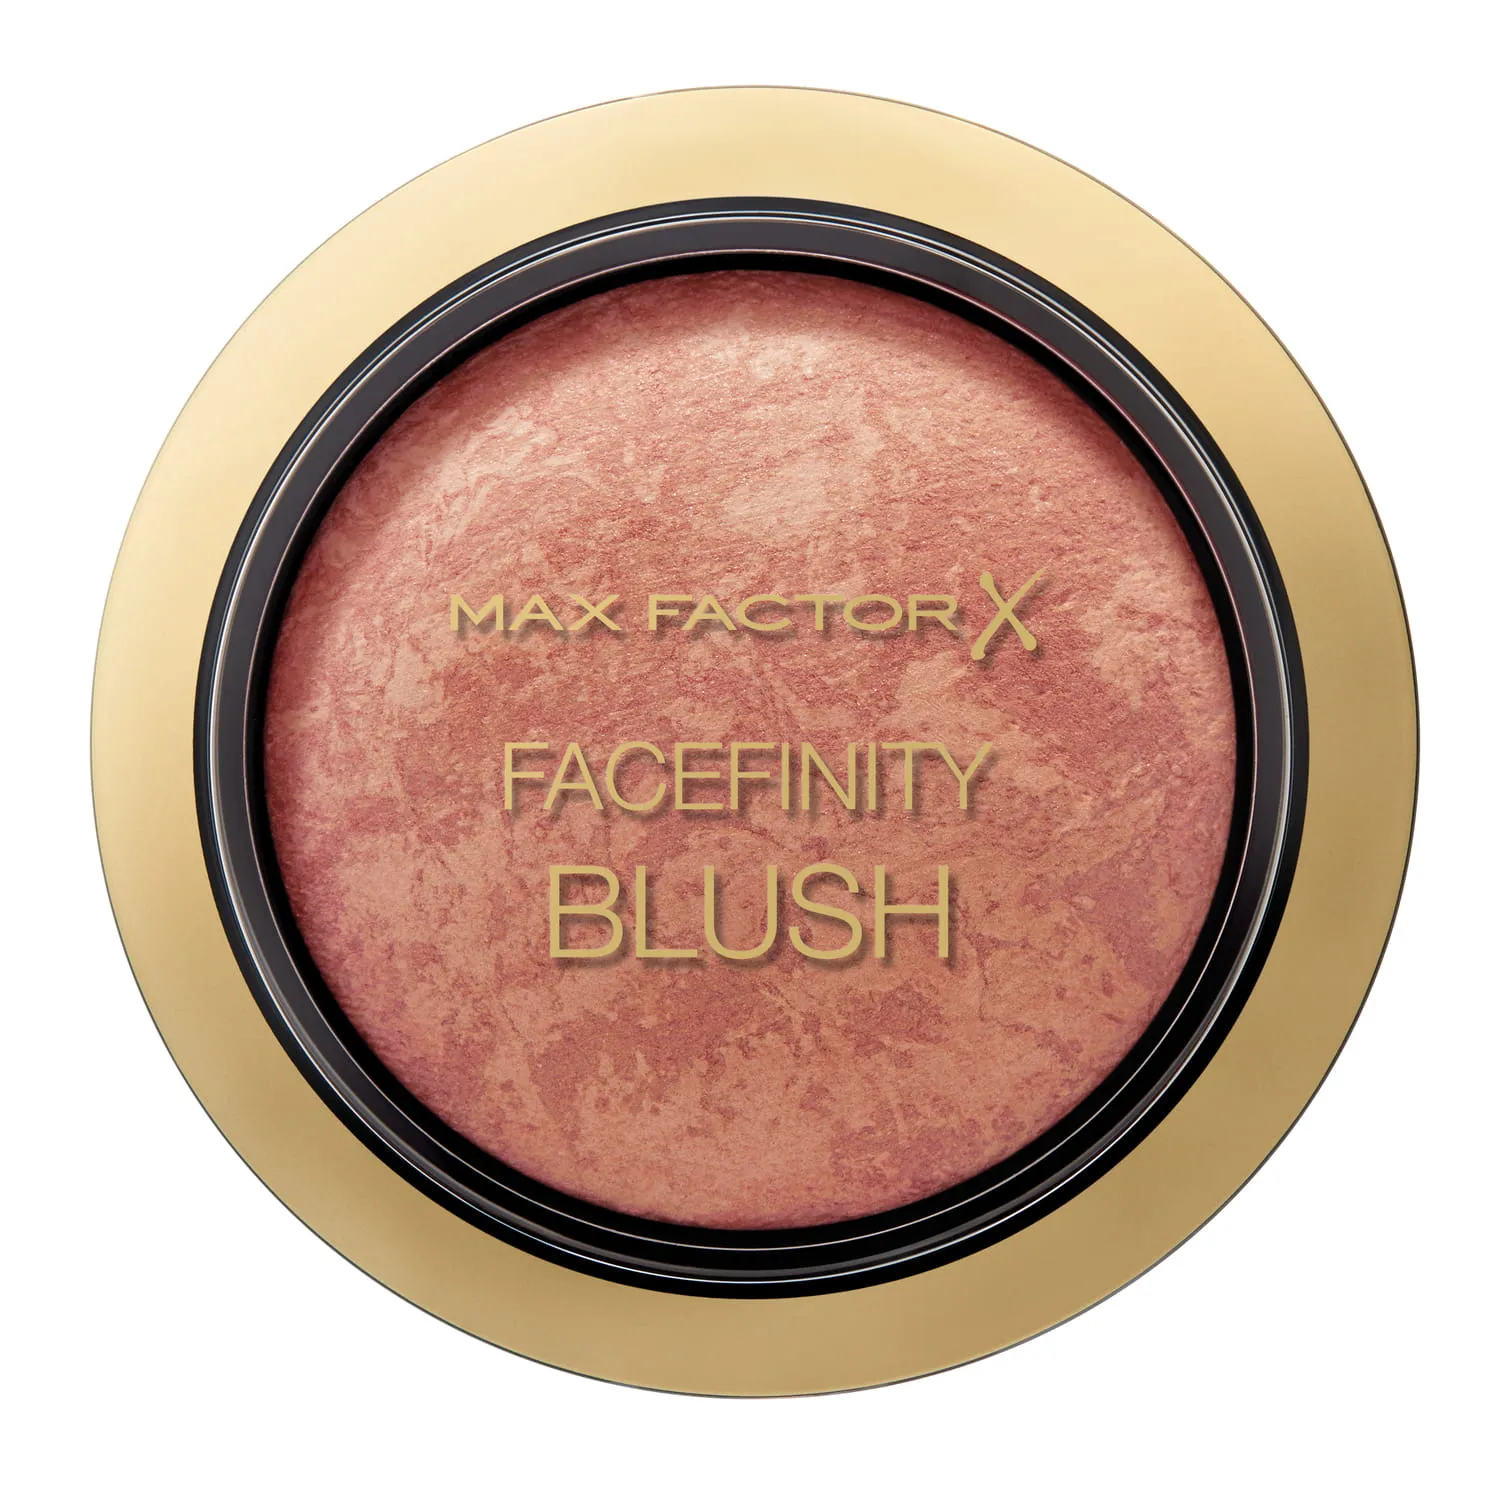 Max Factor Facefinity Blush Creme Puff marmurkowy róż do policzków wypiekany, 15-Seductive Pink, 1,5 g